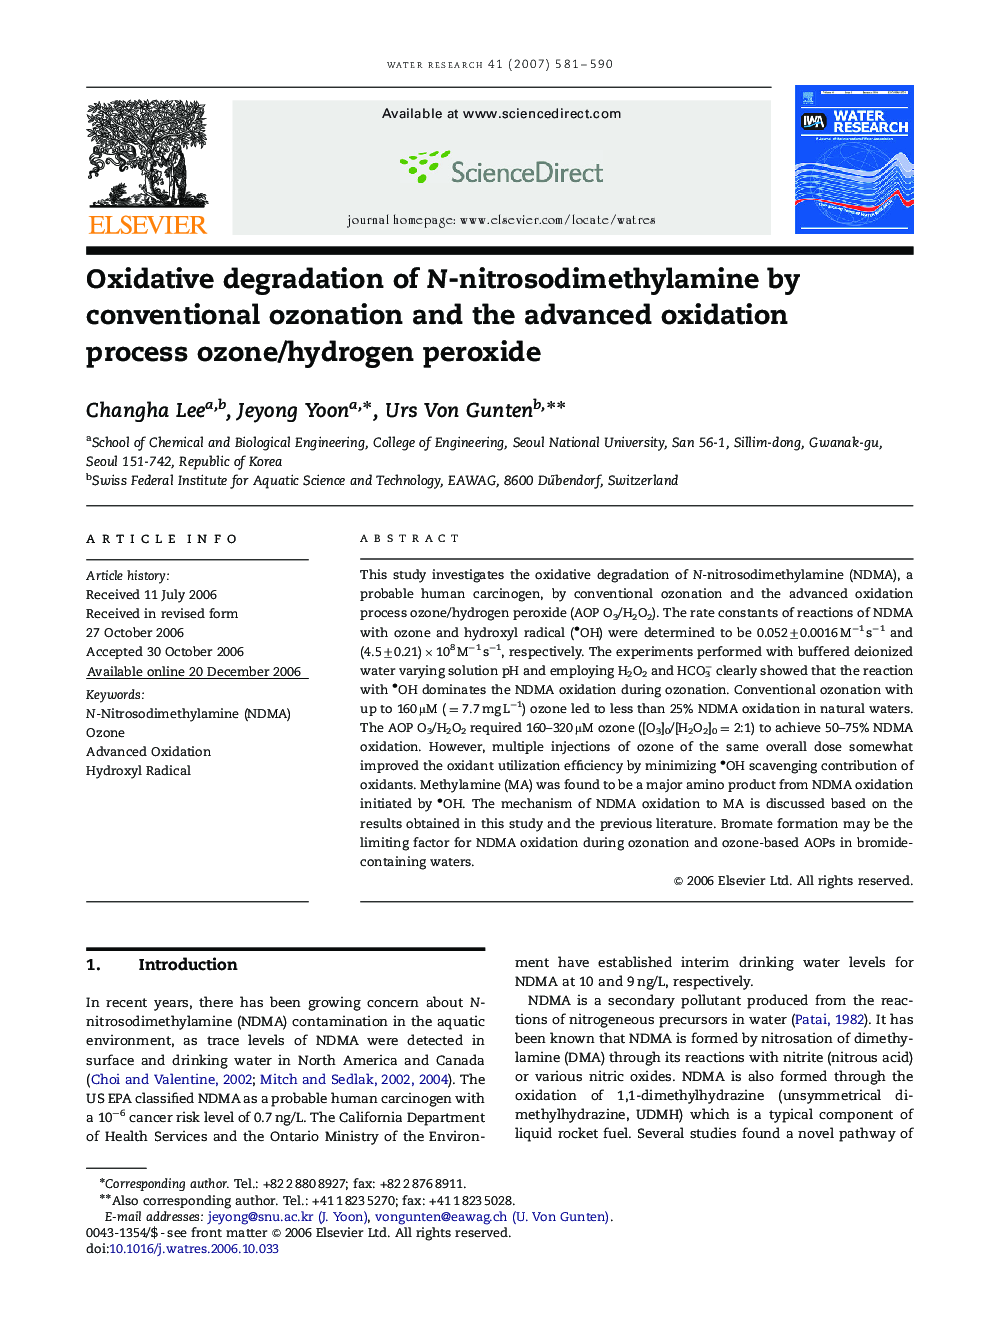 Oxidative degradation of N-nitrosodimethylamine by conventional ozonation and the advanced oxidation process ozone/hydrogen peroxide